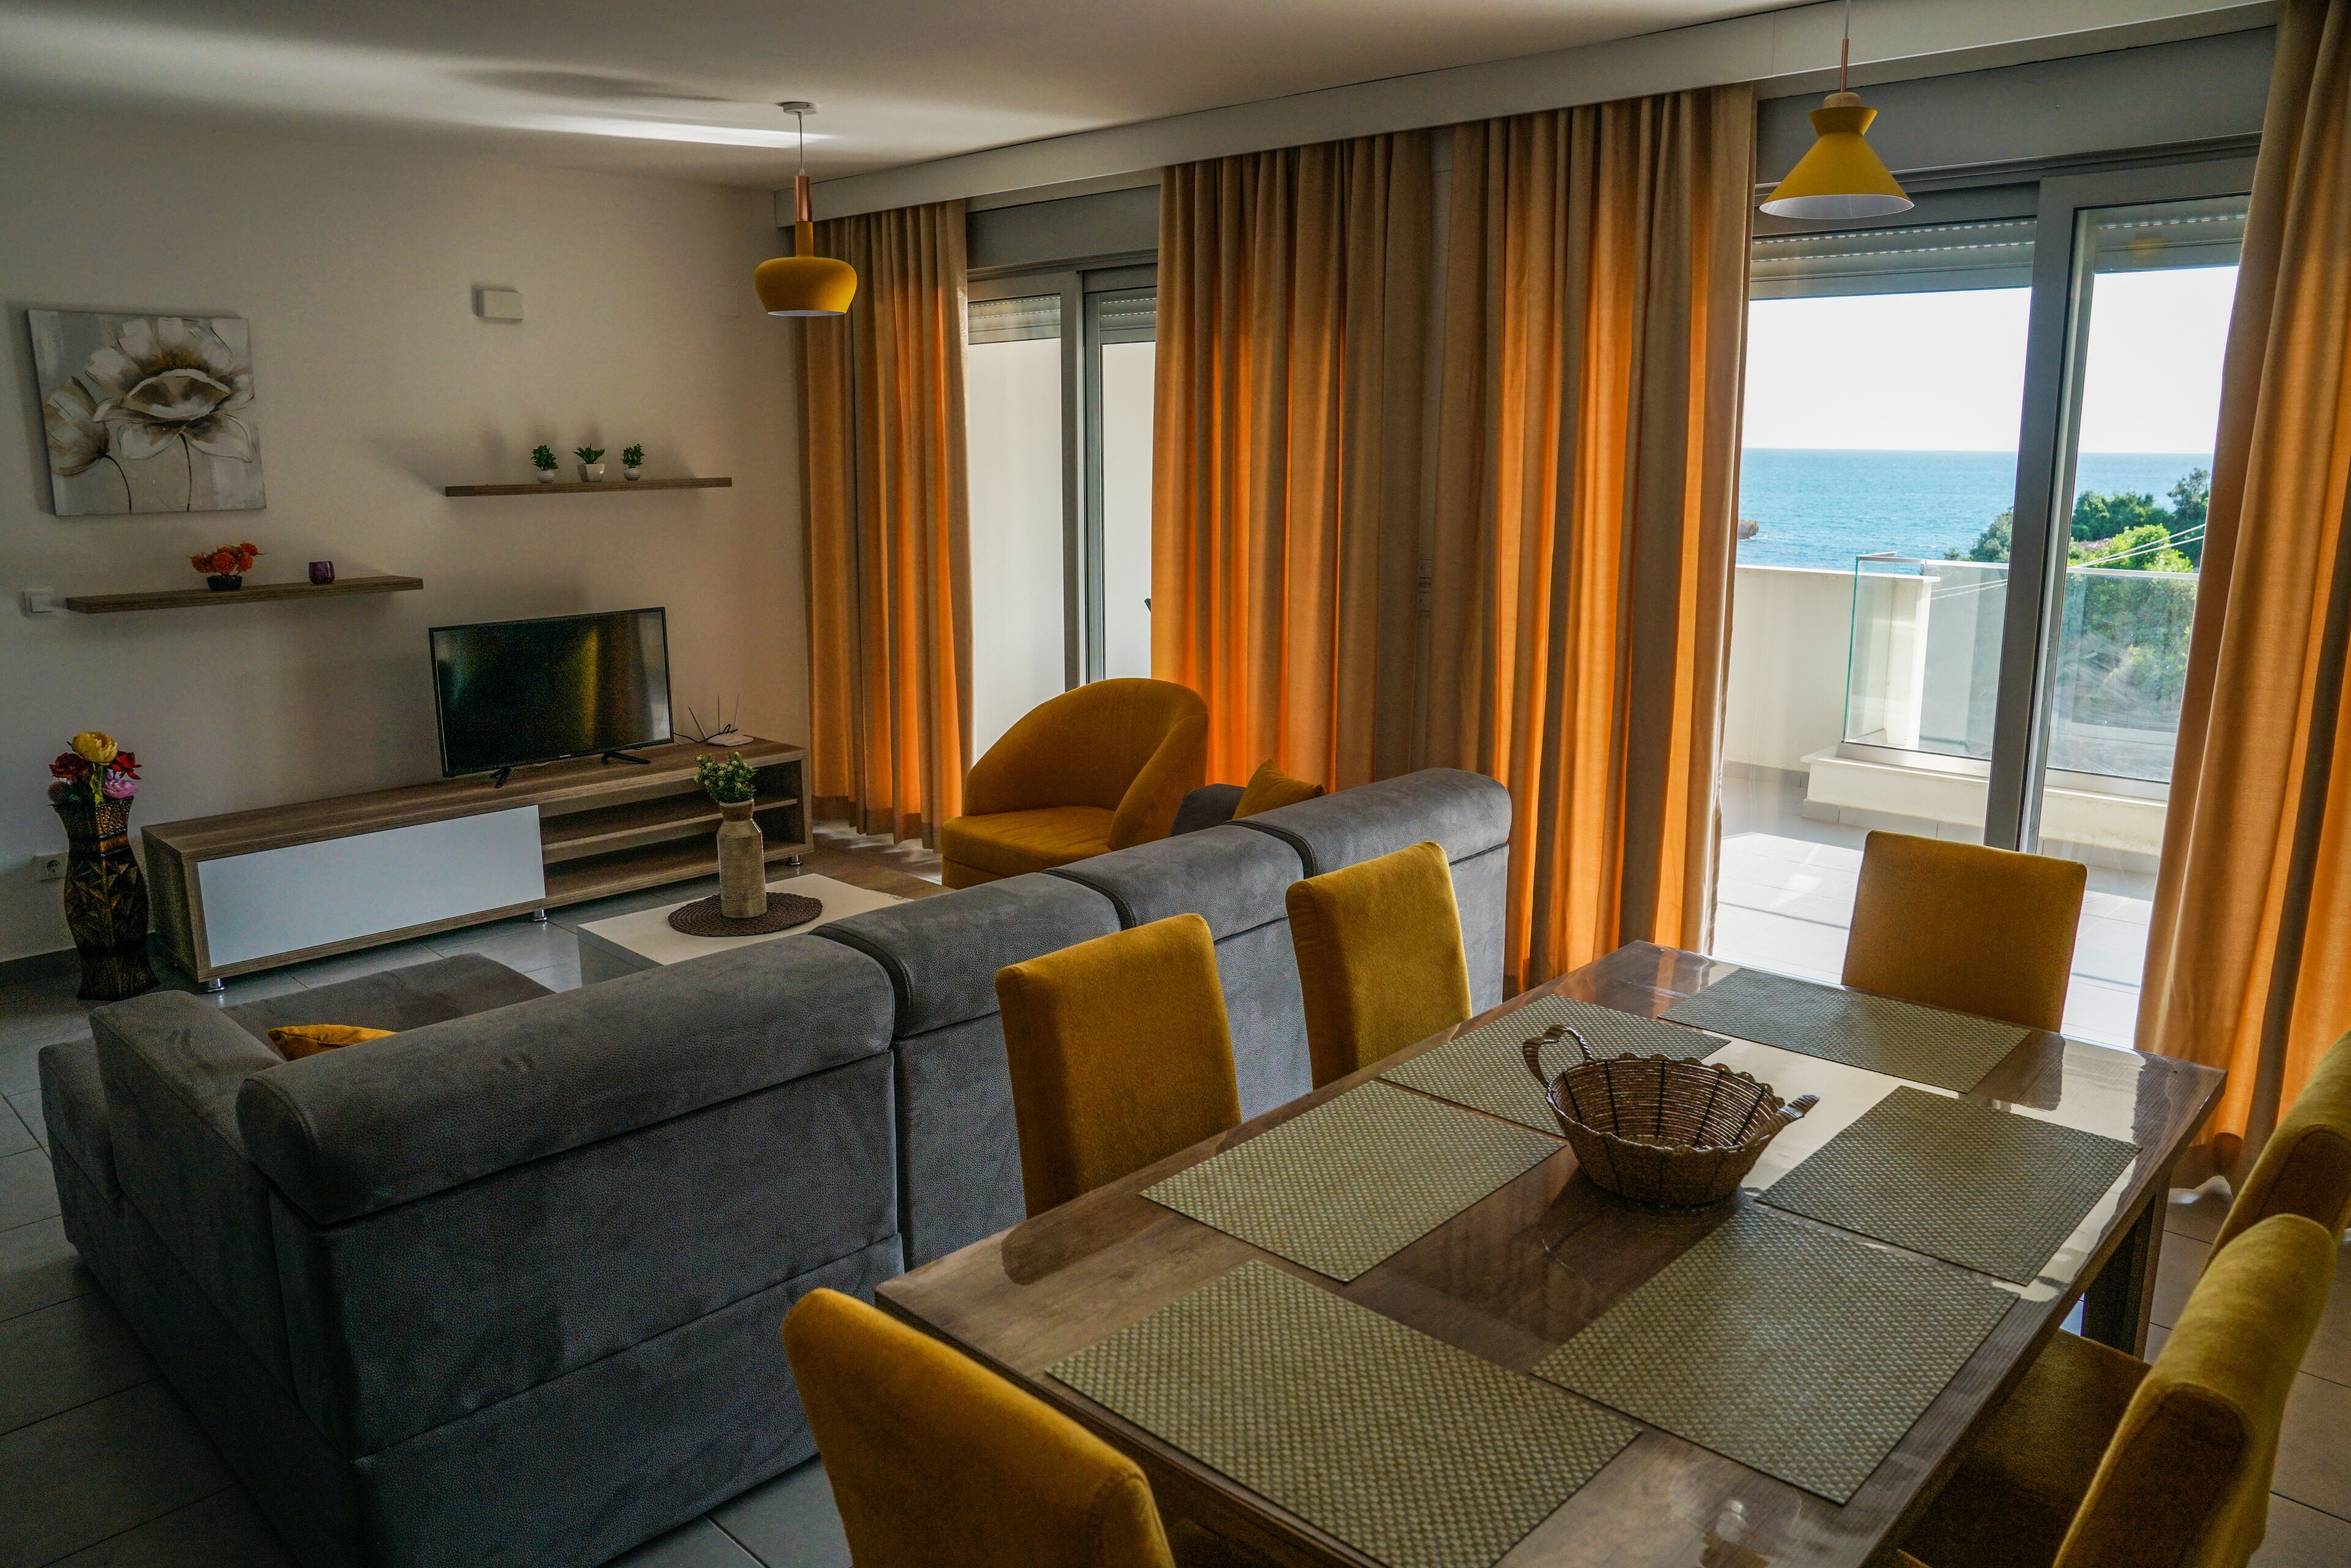 Buzuku Apartments Liman- Mediterraneo